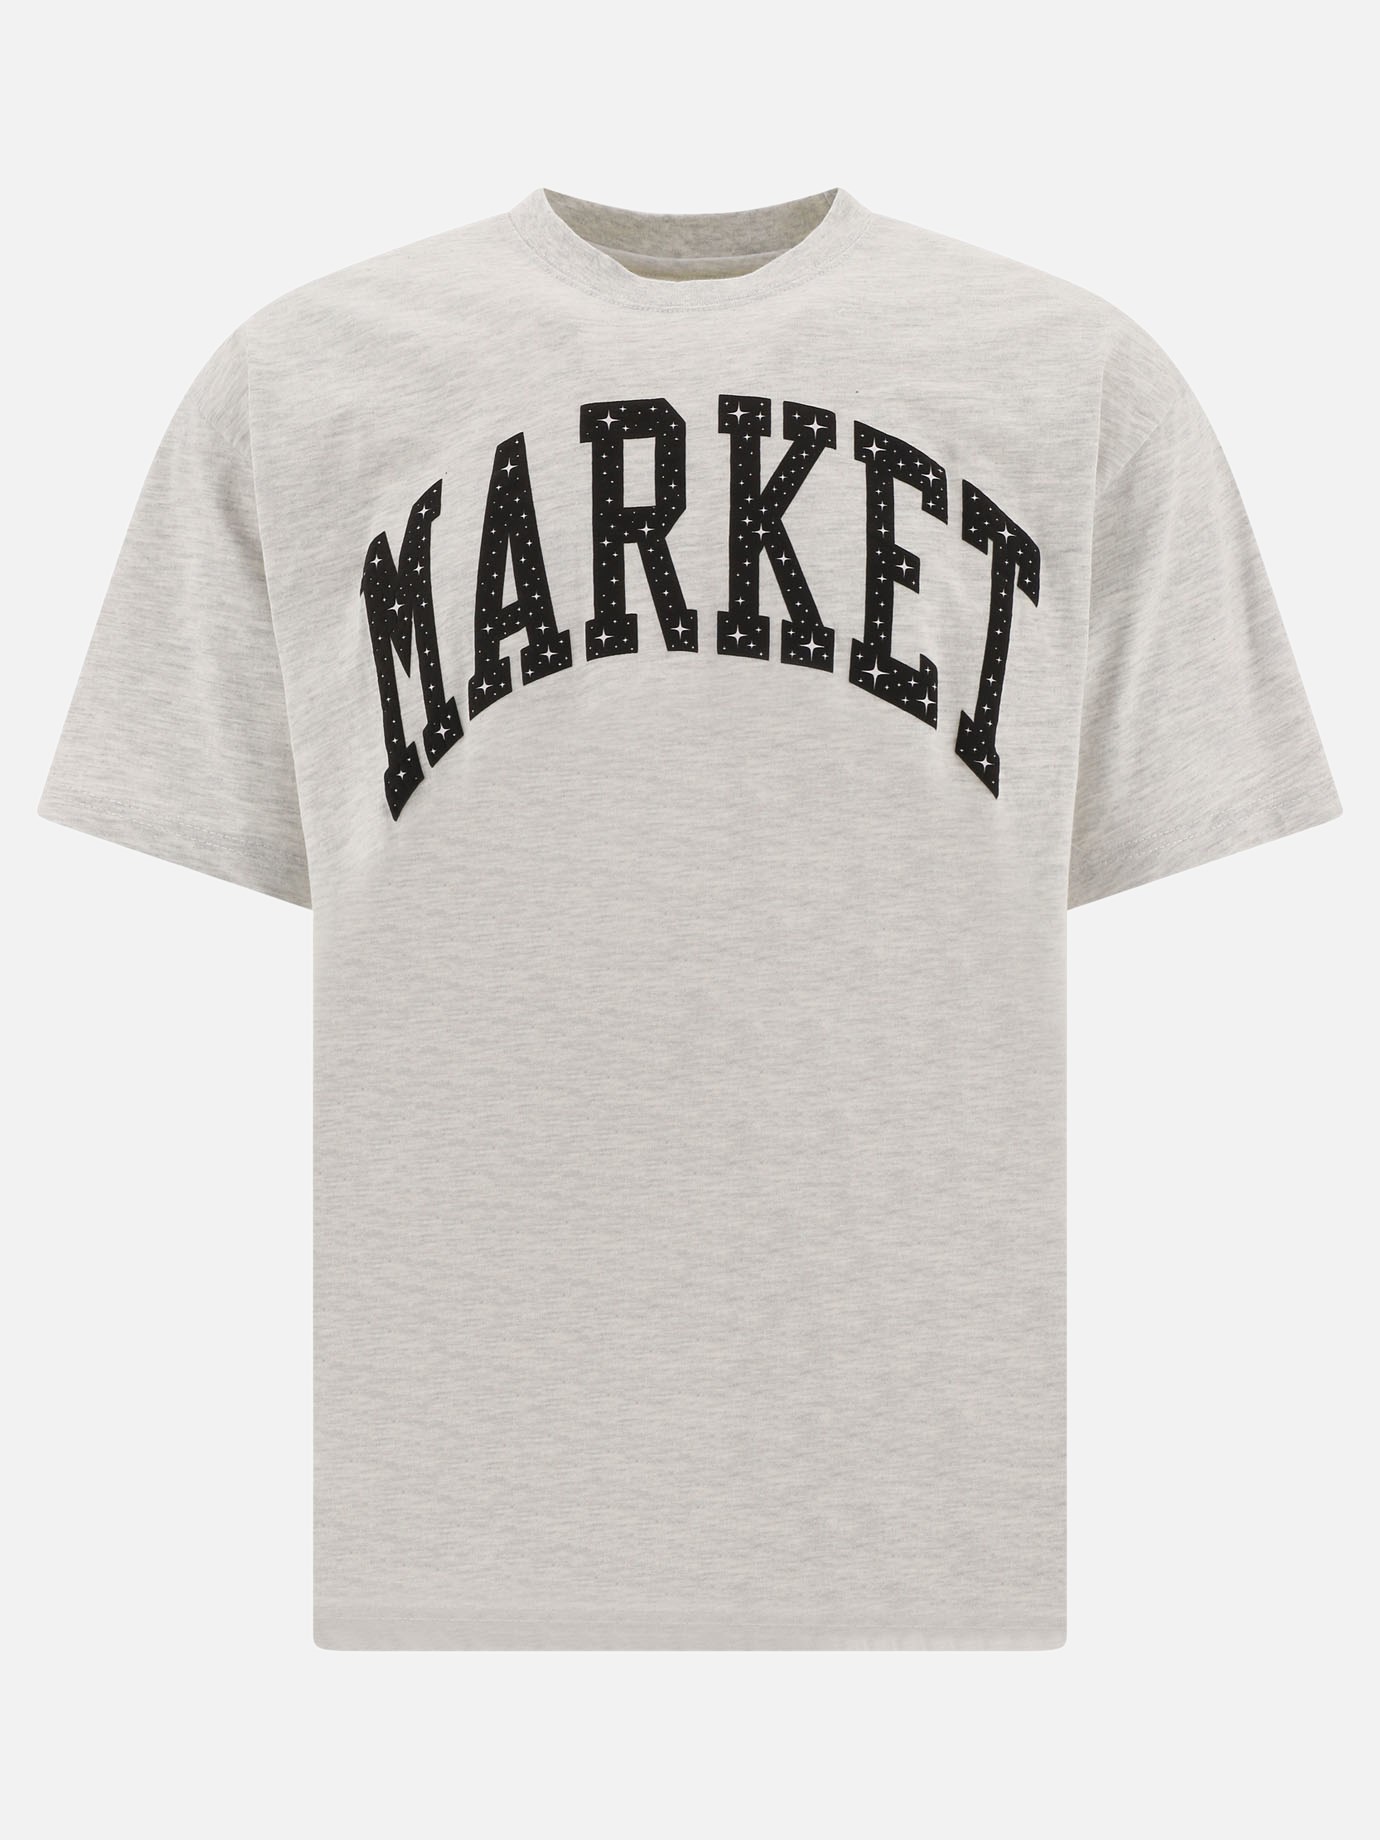  Market Arc  t-shirt by Market